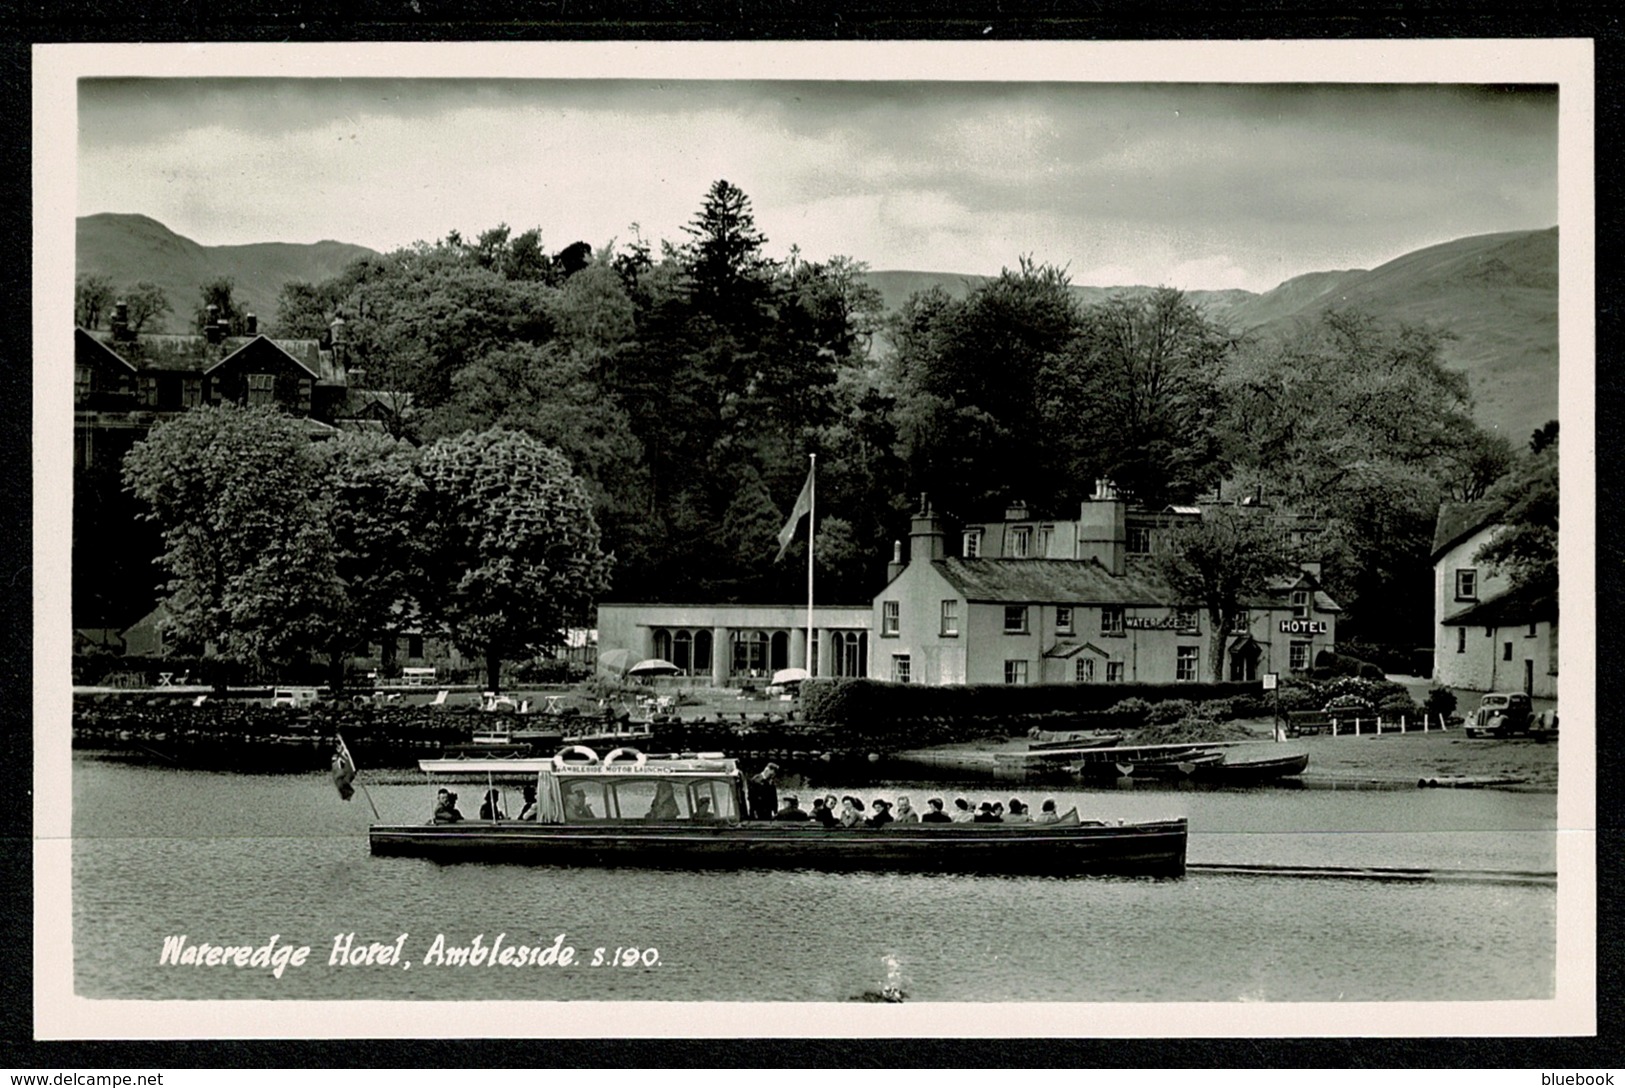 Ref 1314 - Real Photo Postcard - Wateredge Hotel Ambleside Boat - Lake District Cumbria - Ambleside